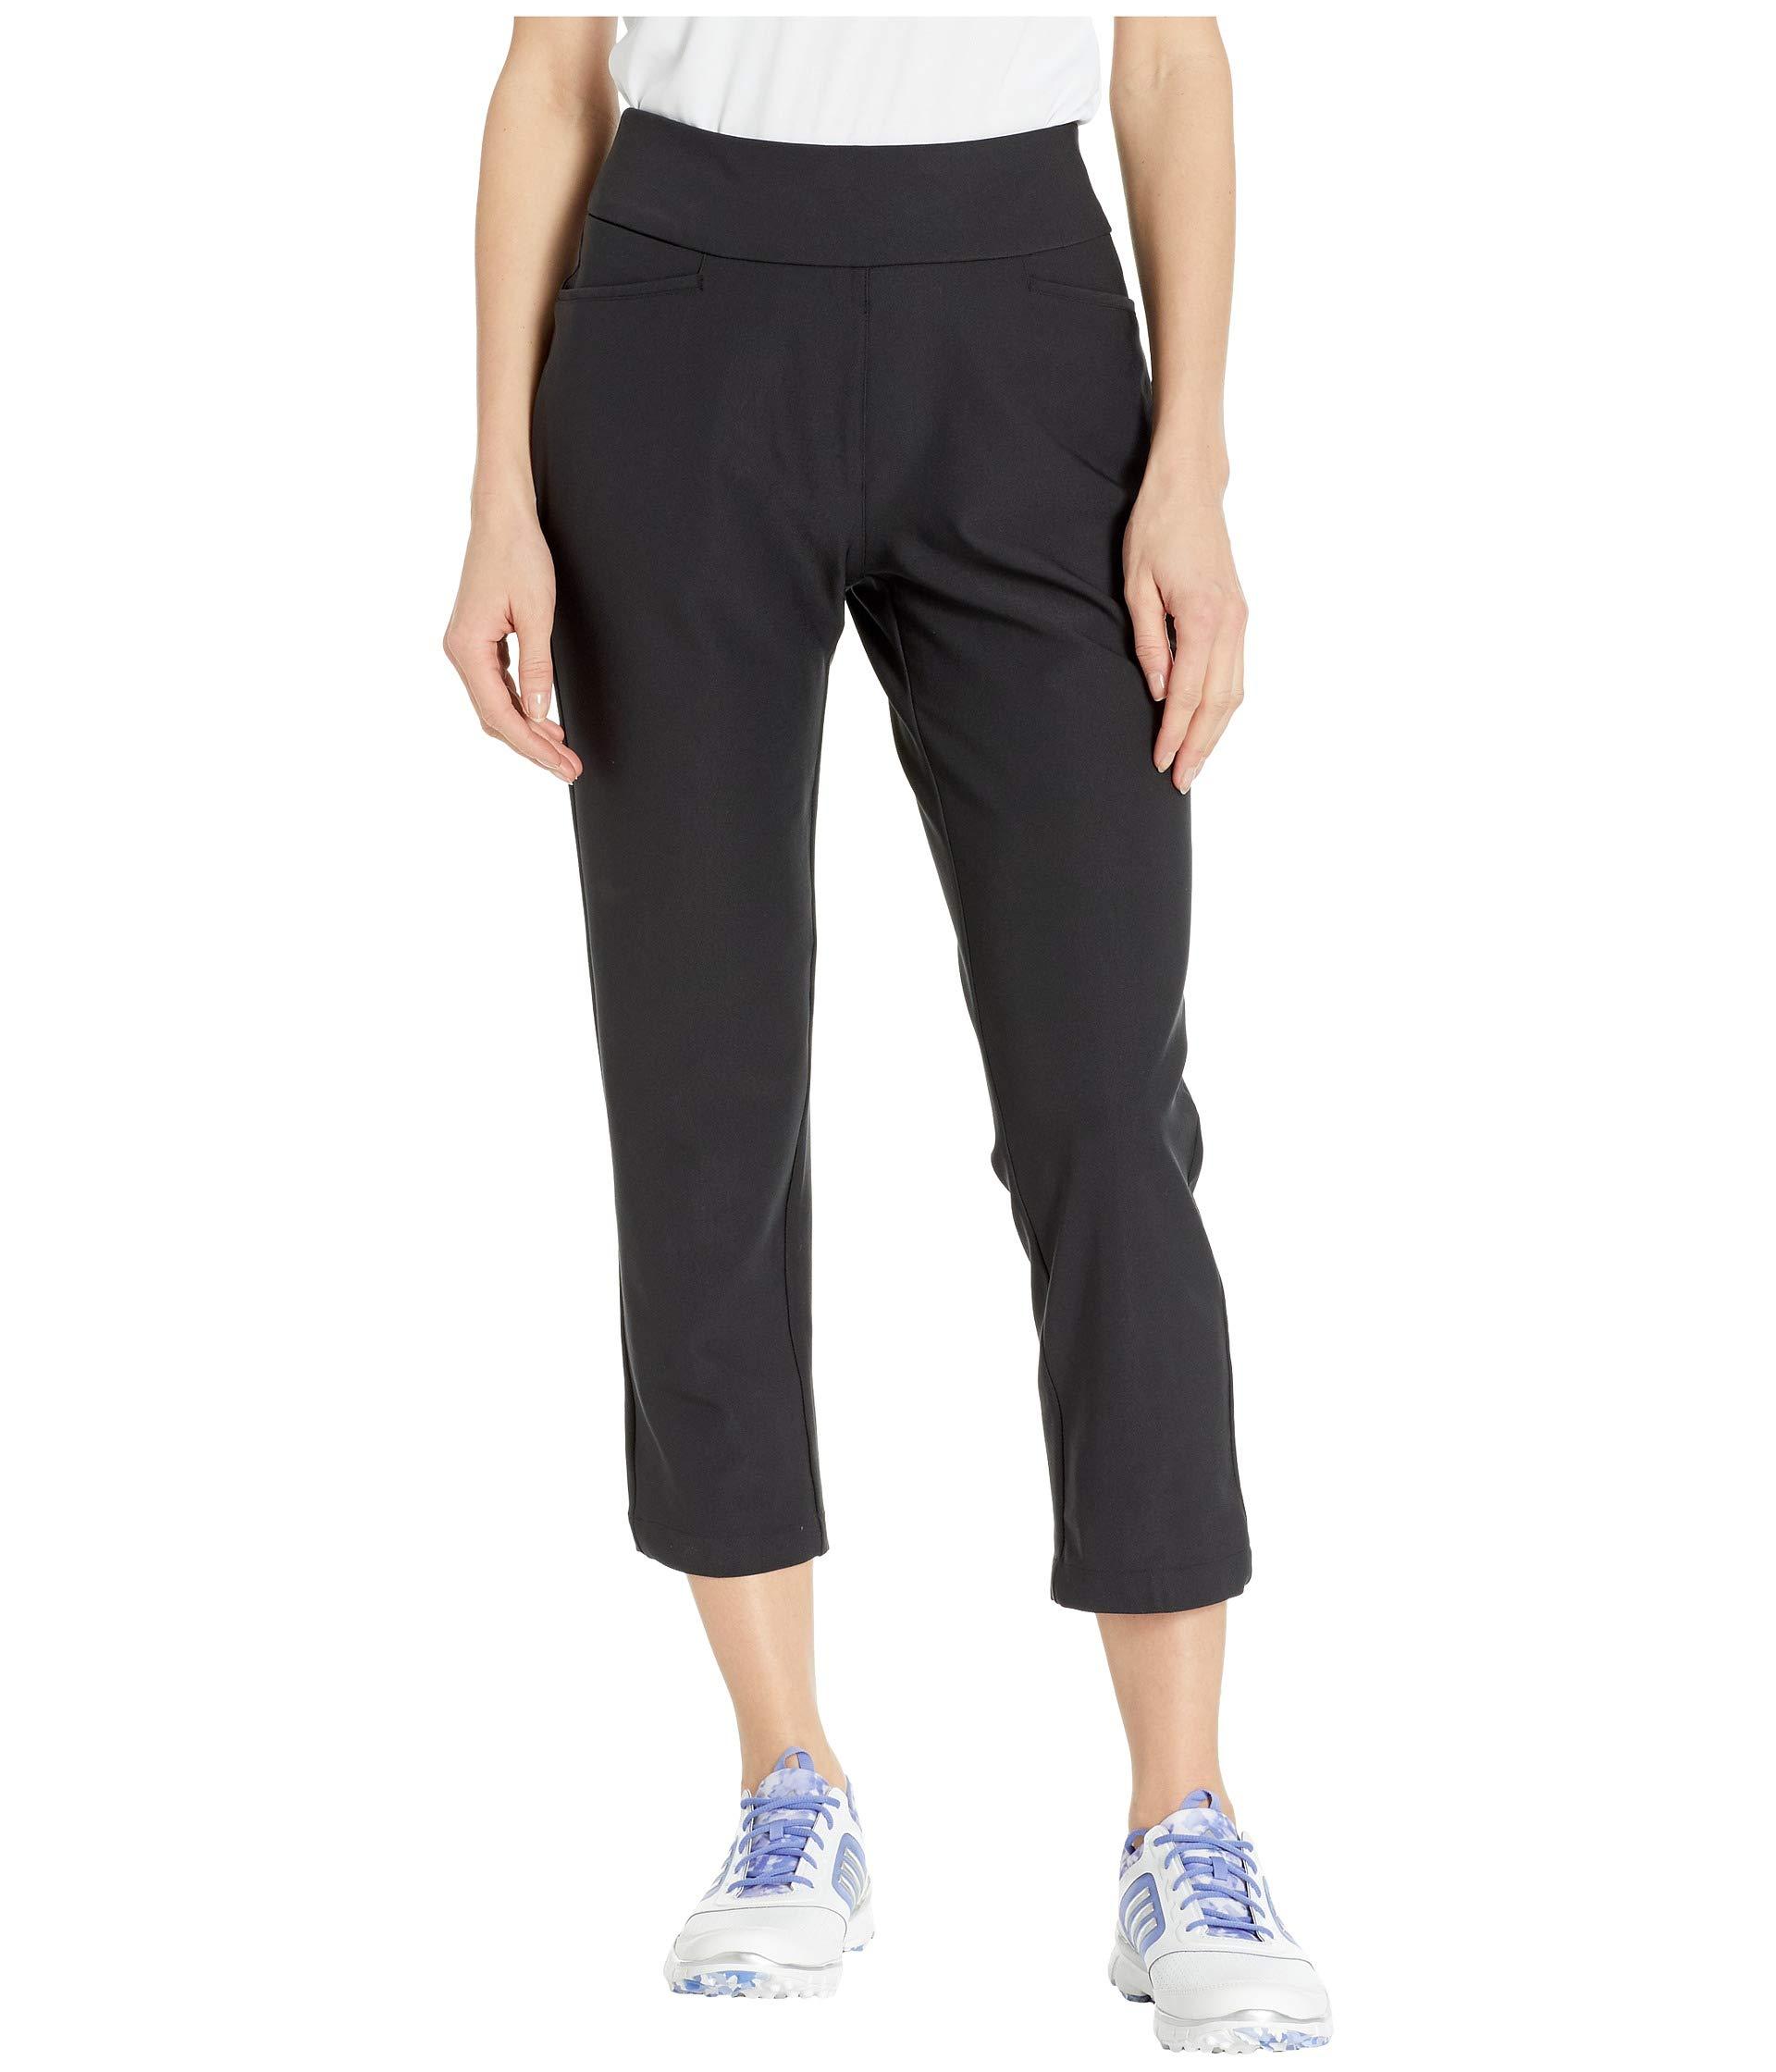 Lyst - adidas Originals Ultimate365 Adistar Cropped Pants (black) Women ...